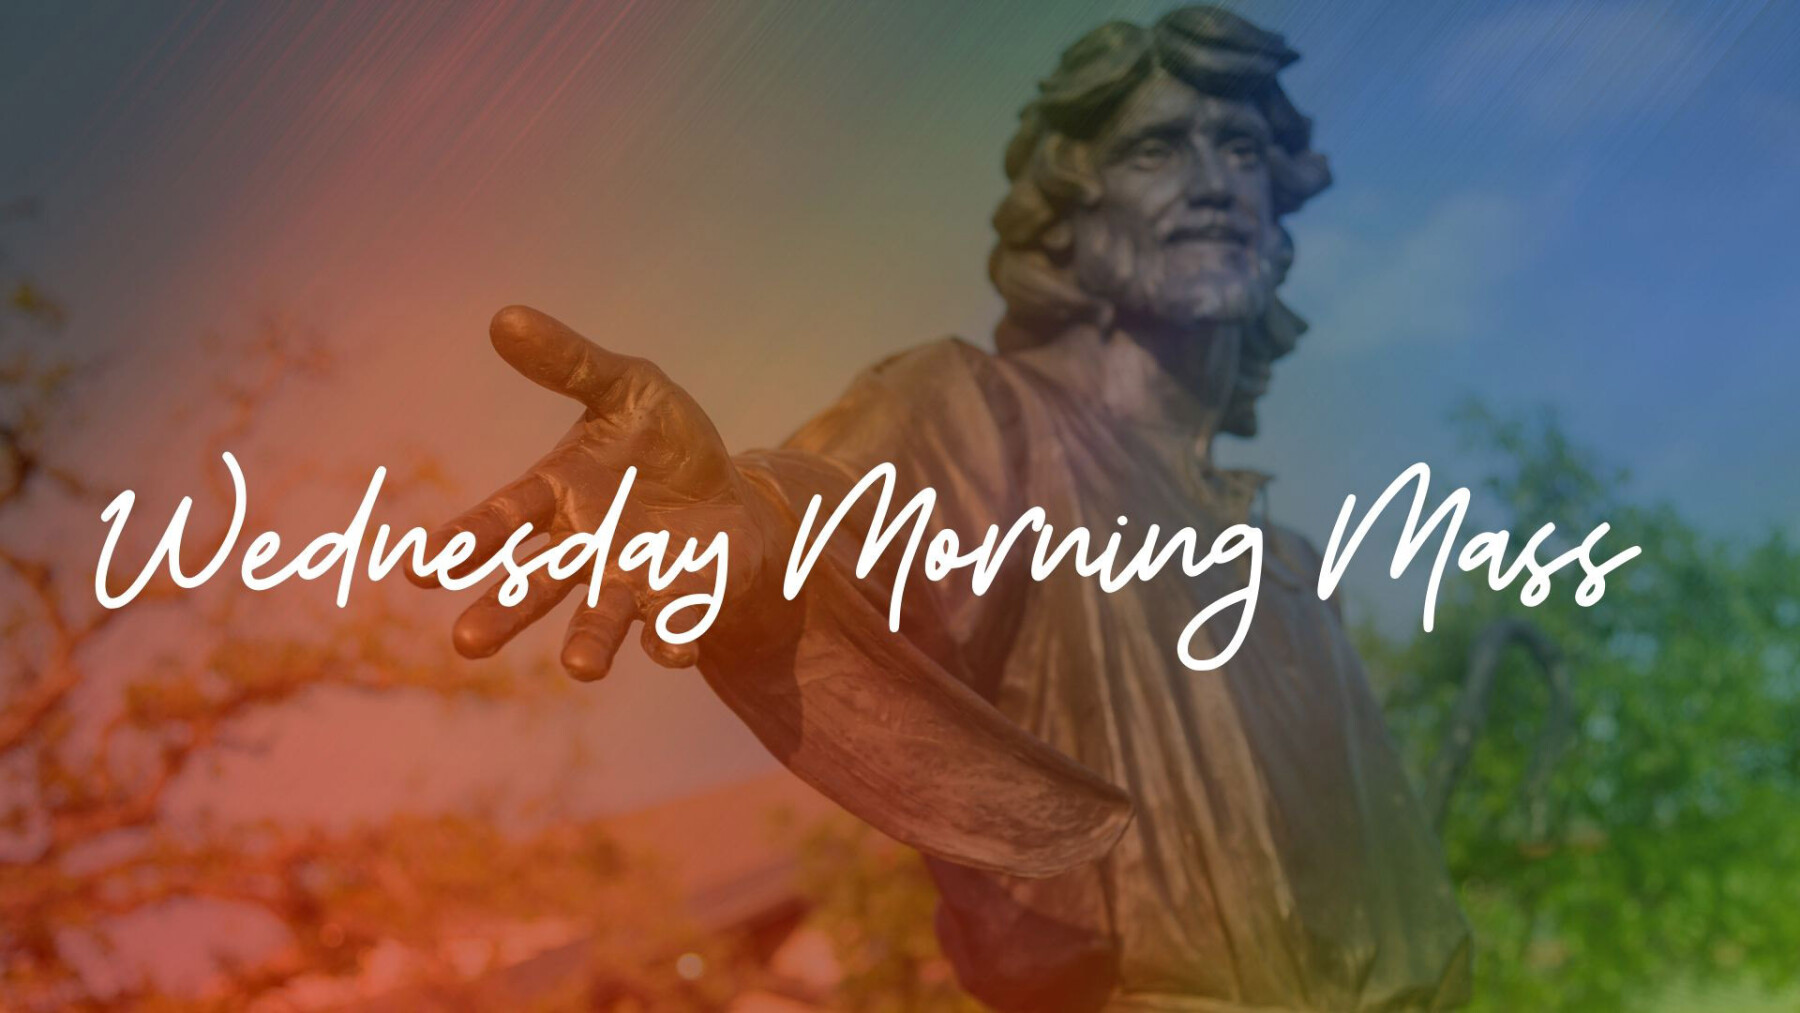 Wednesday Morning Mass